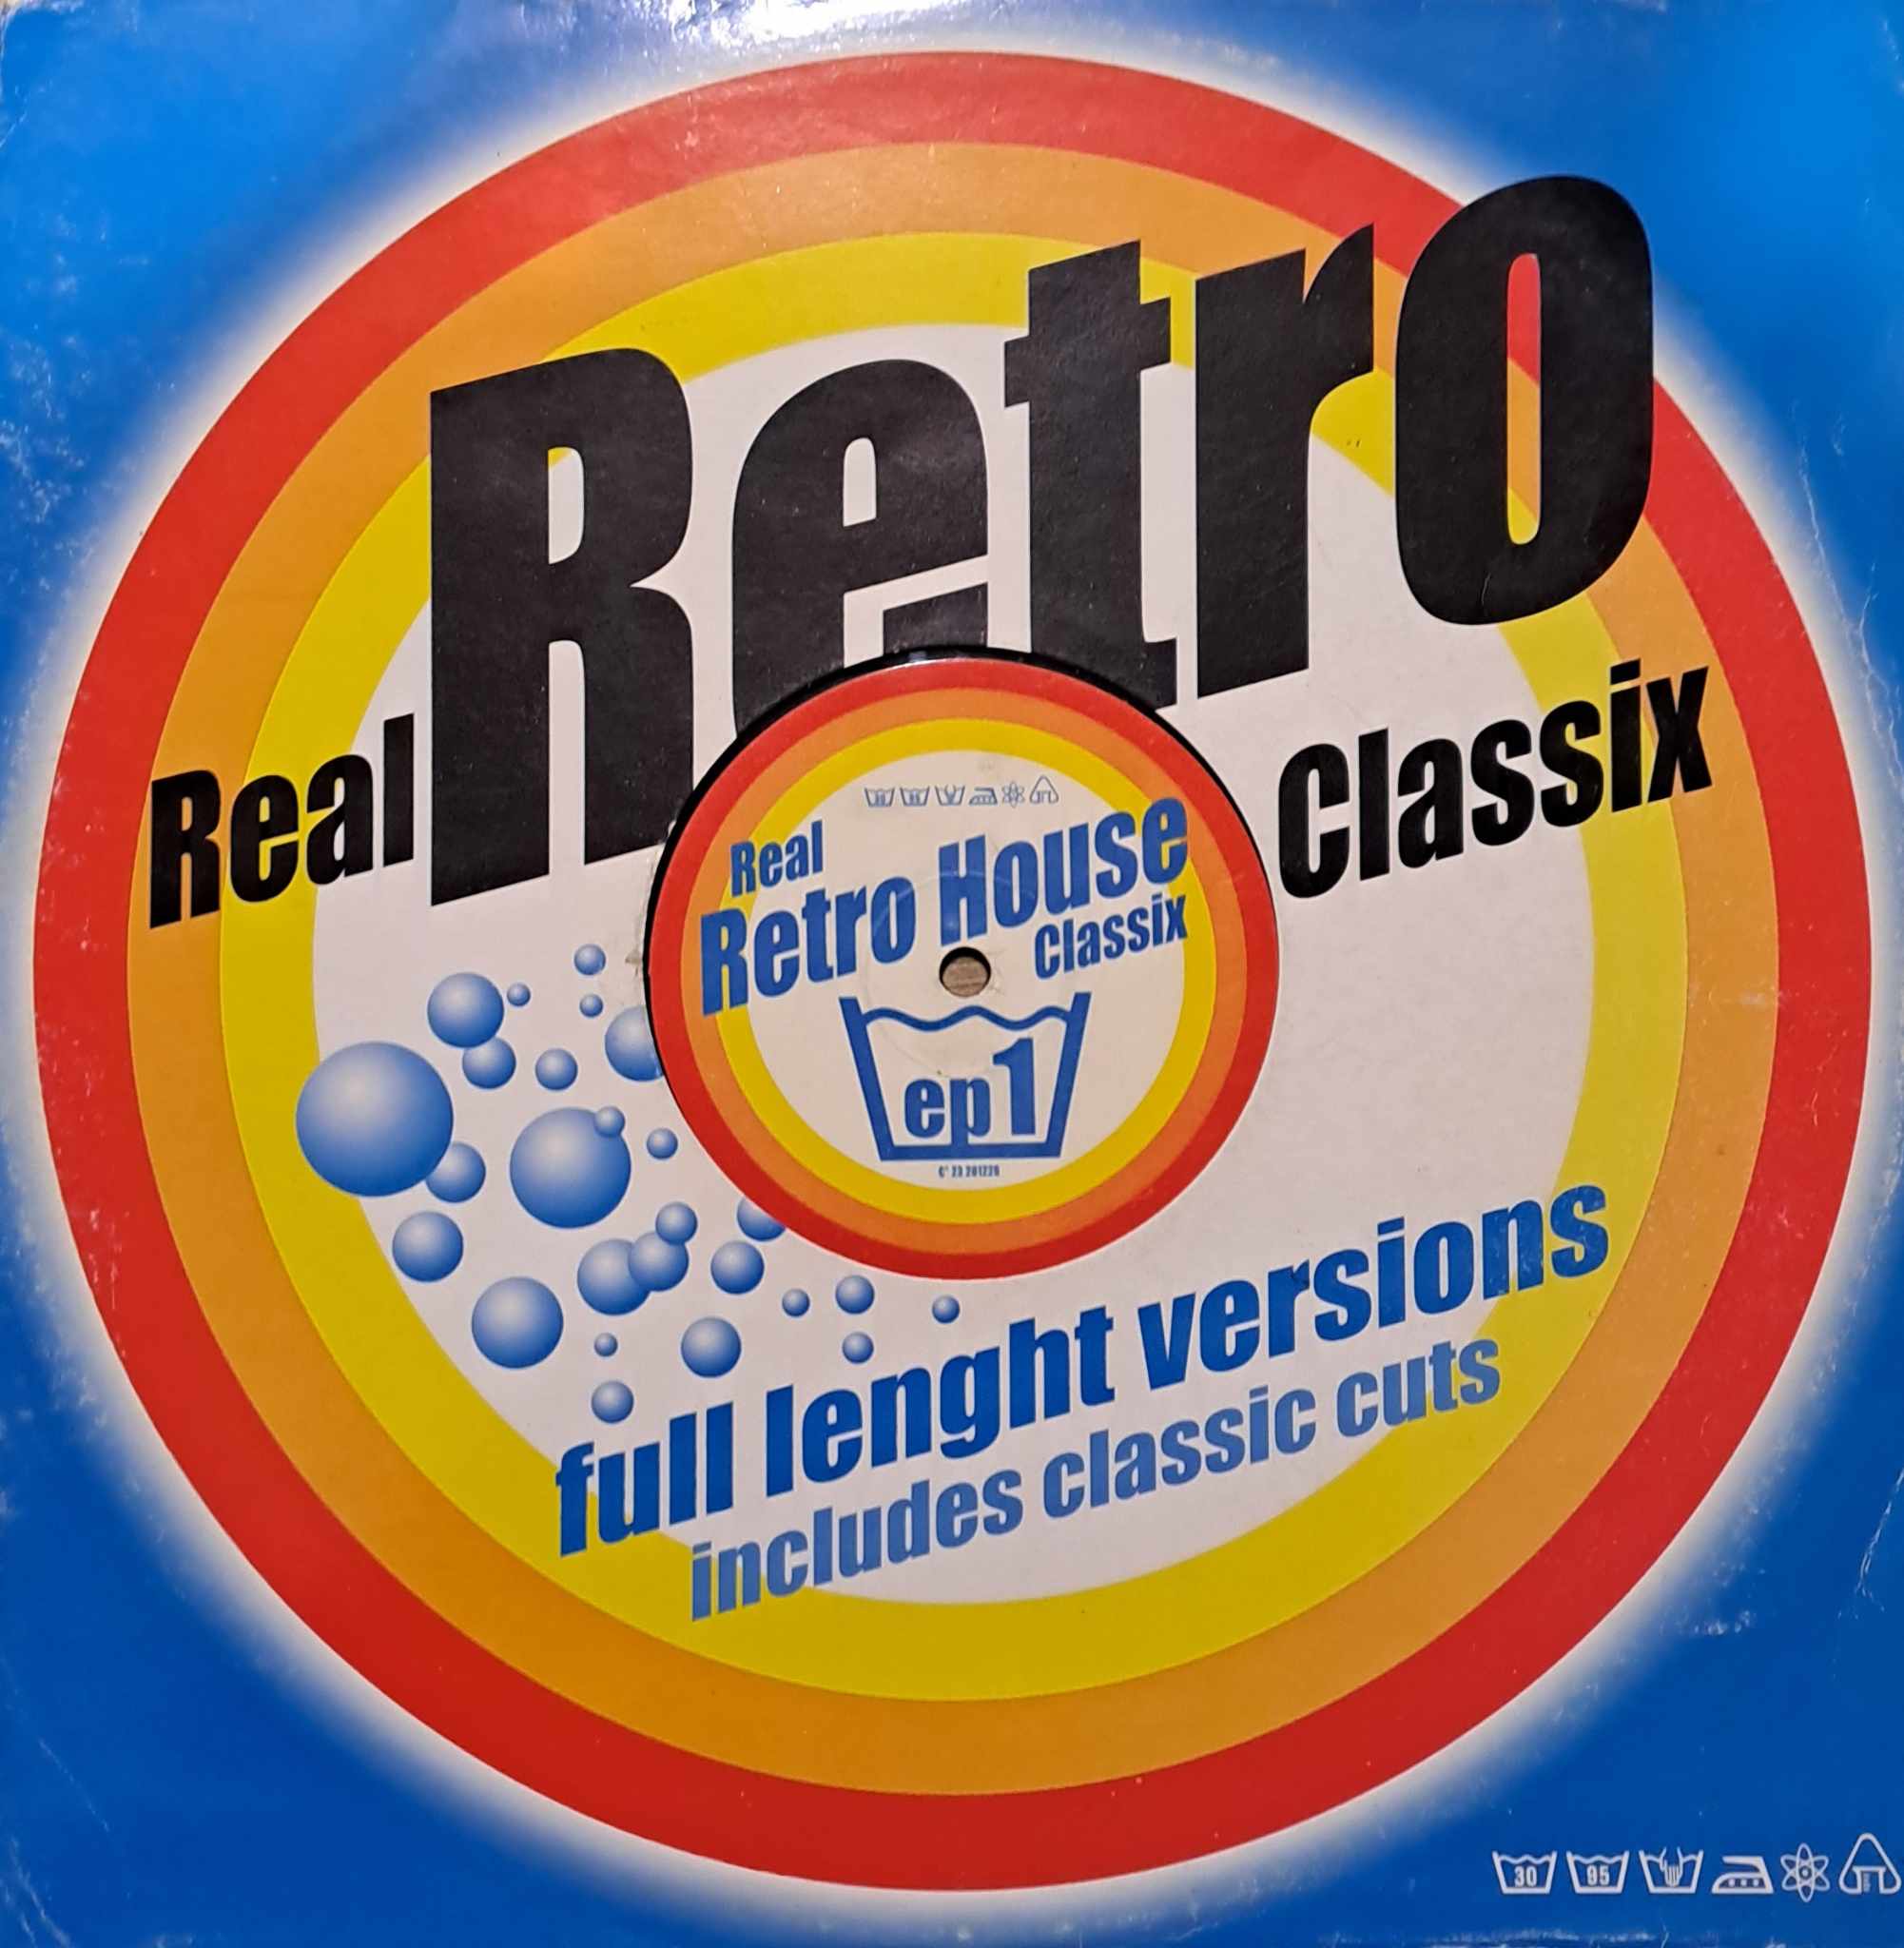 Real Retro House Classix EP 1 - vinyle Hard Trance